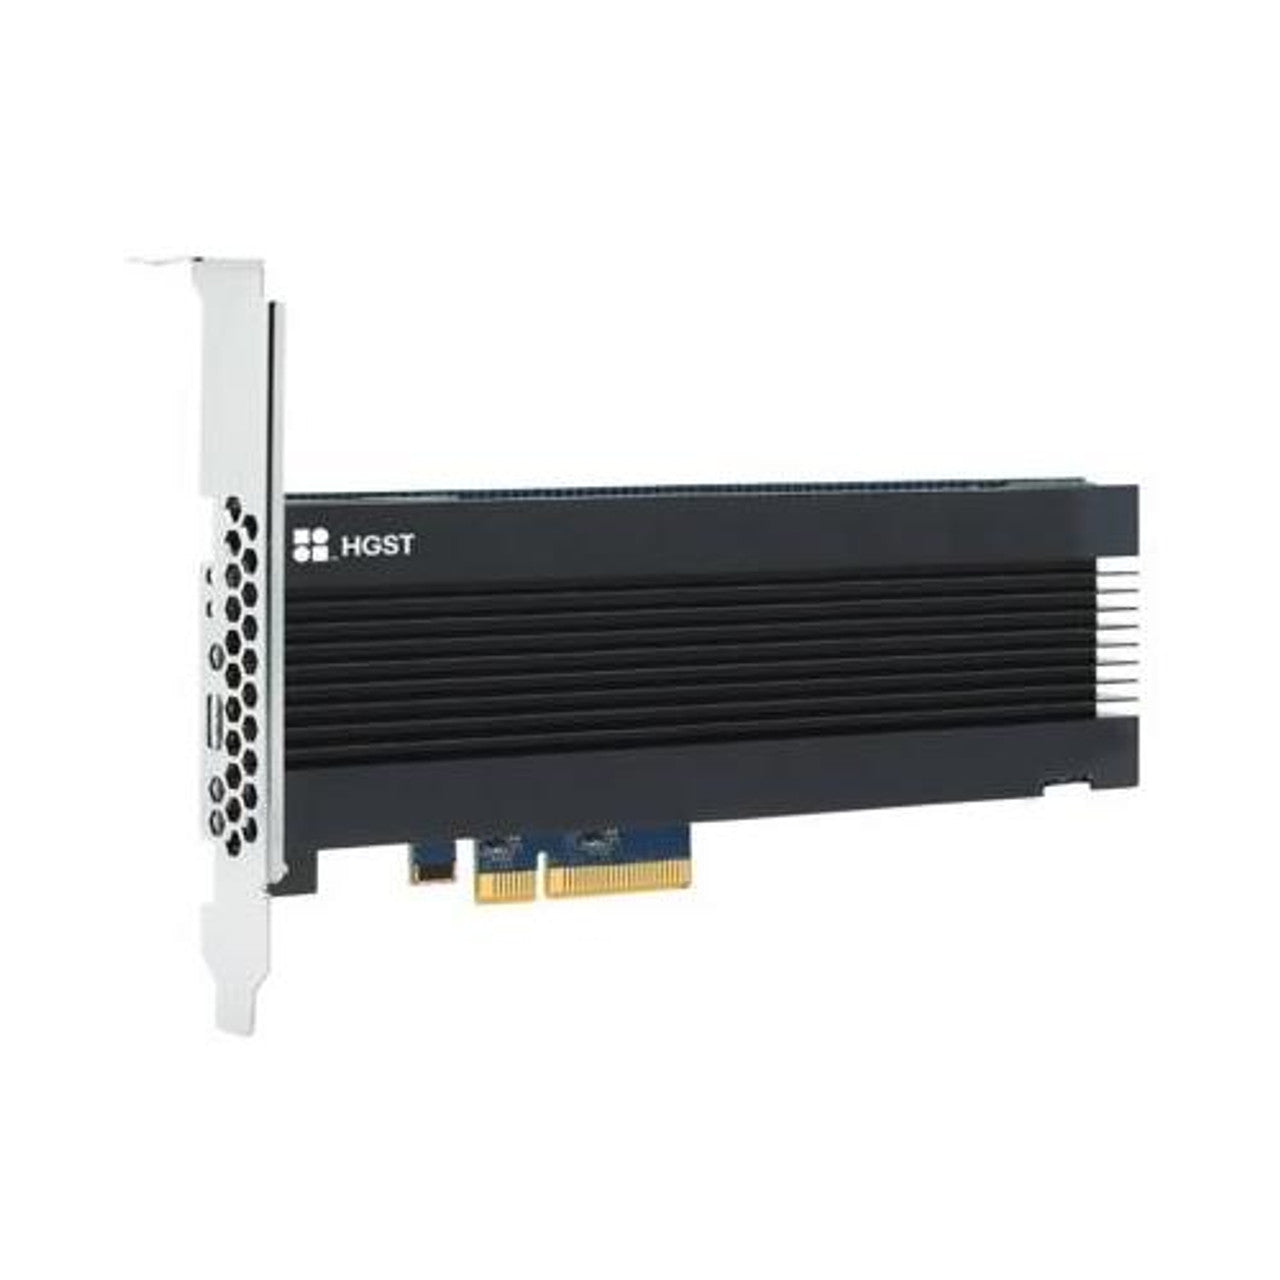 Western Digital Ultrastar DC SN200 HUSMR7616BHP301 0TS1484 1.6TB PCIe Gen3 x8 8GB/s MLC NVMe AIC HHHLin Refurbished SSD